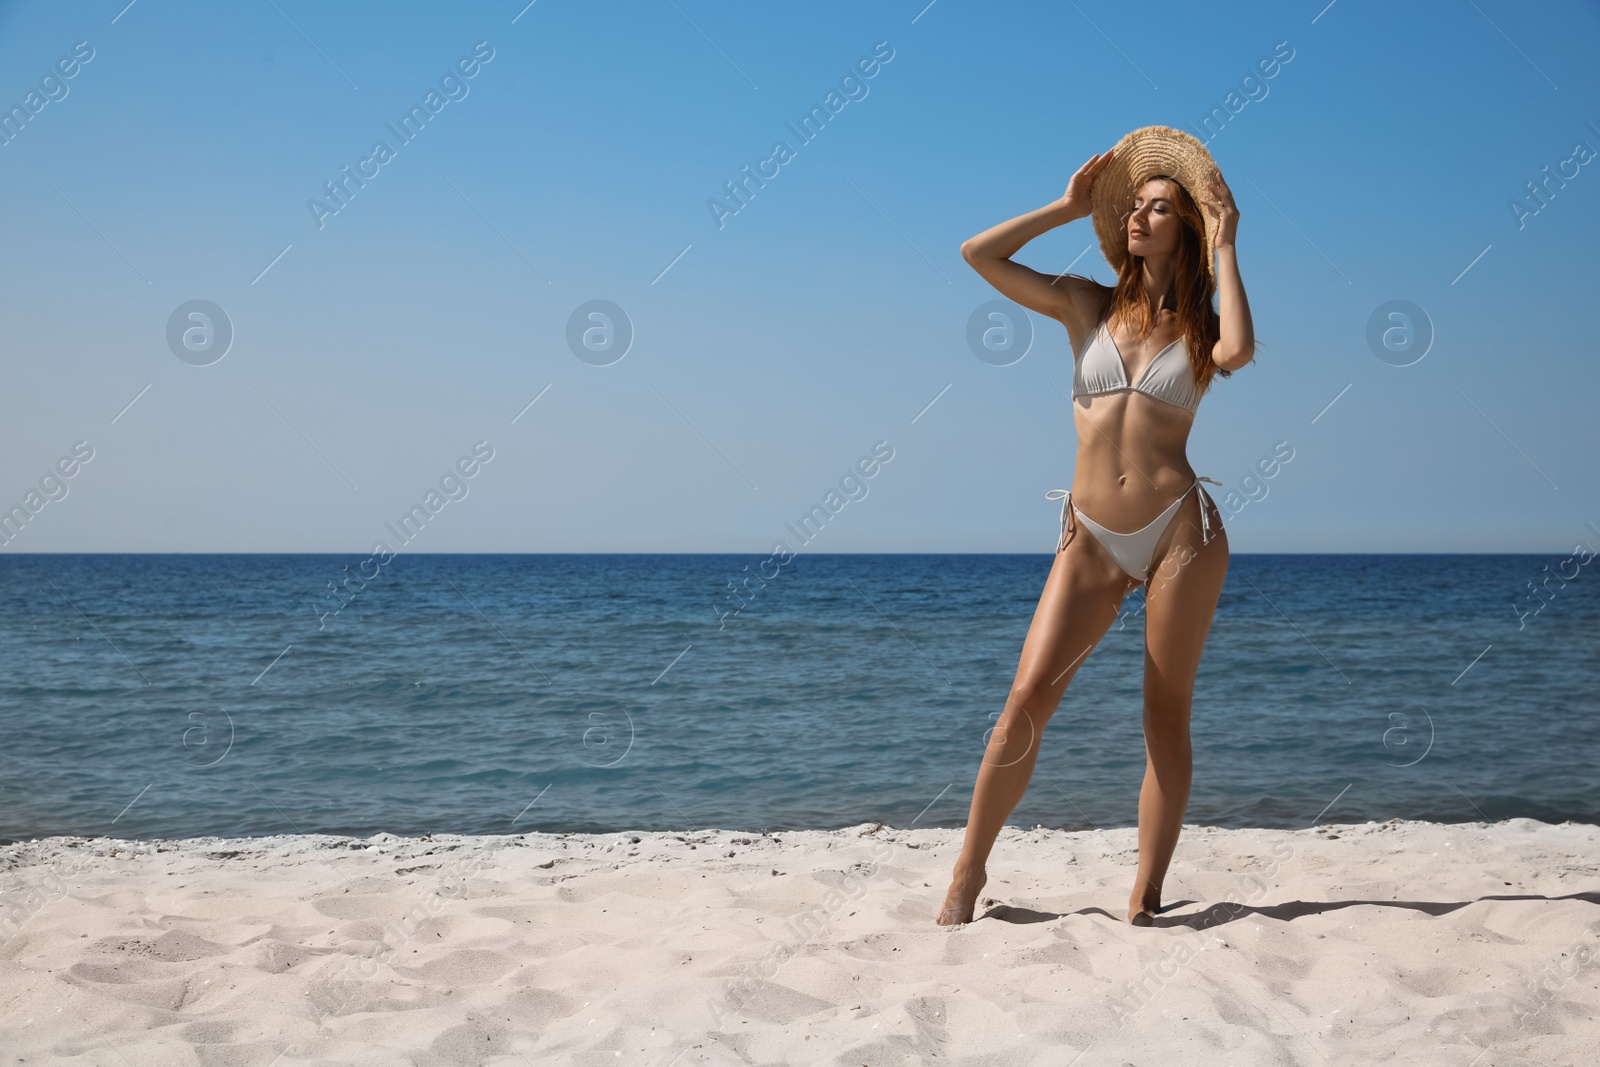 Photo of Attractive woman in bikini on sandy beach near sea